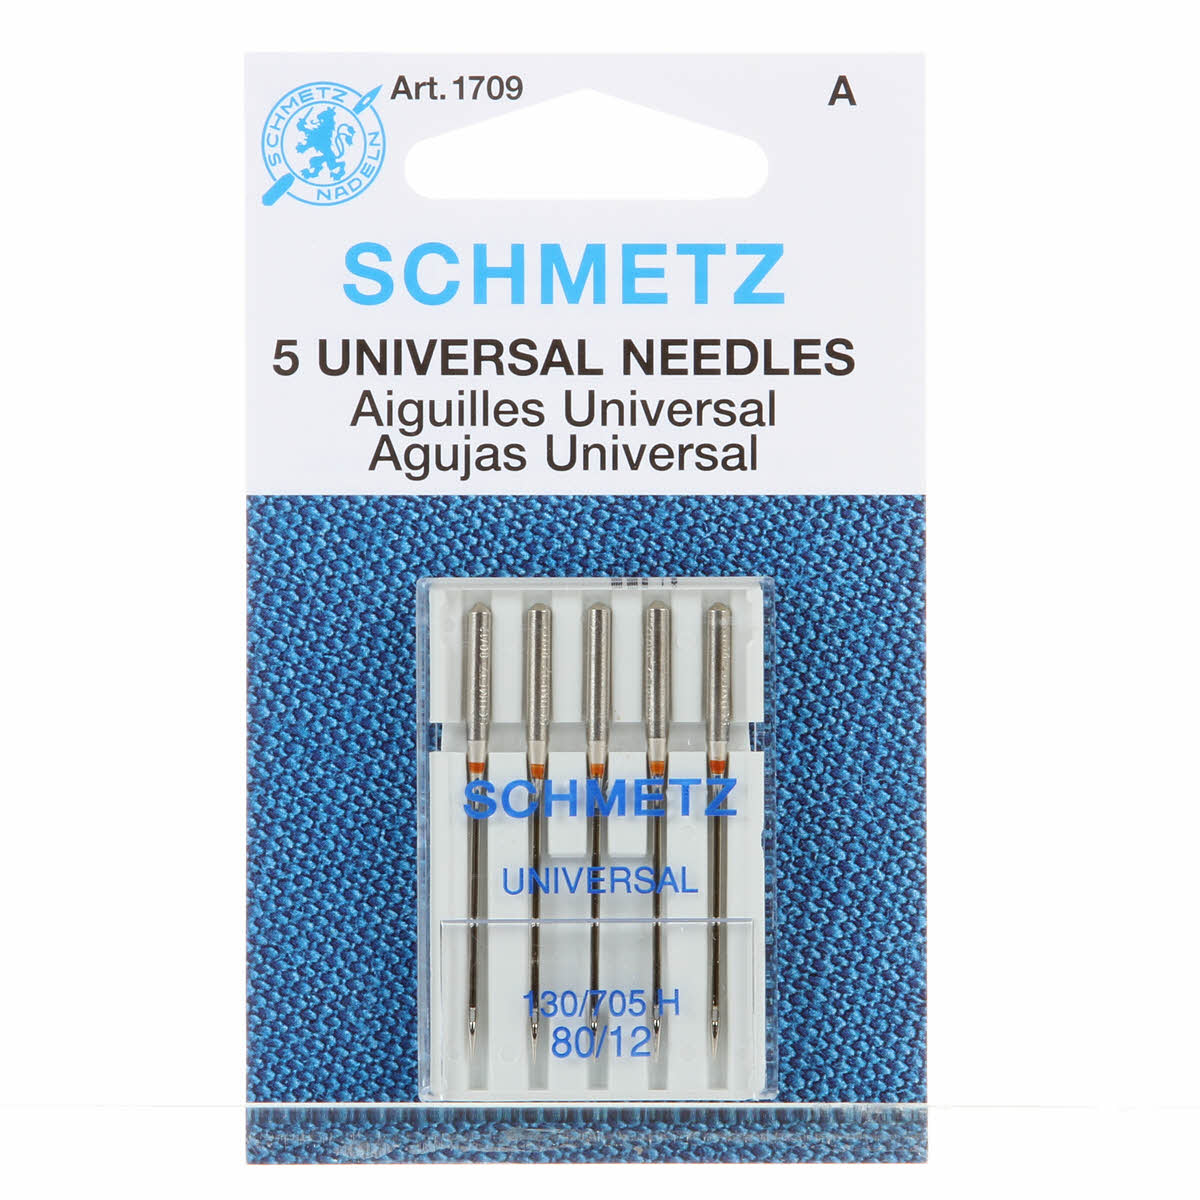 Schmetz Universal Needles Carded - 80/12 - 5 count